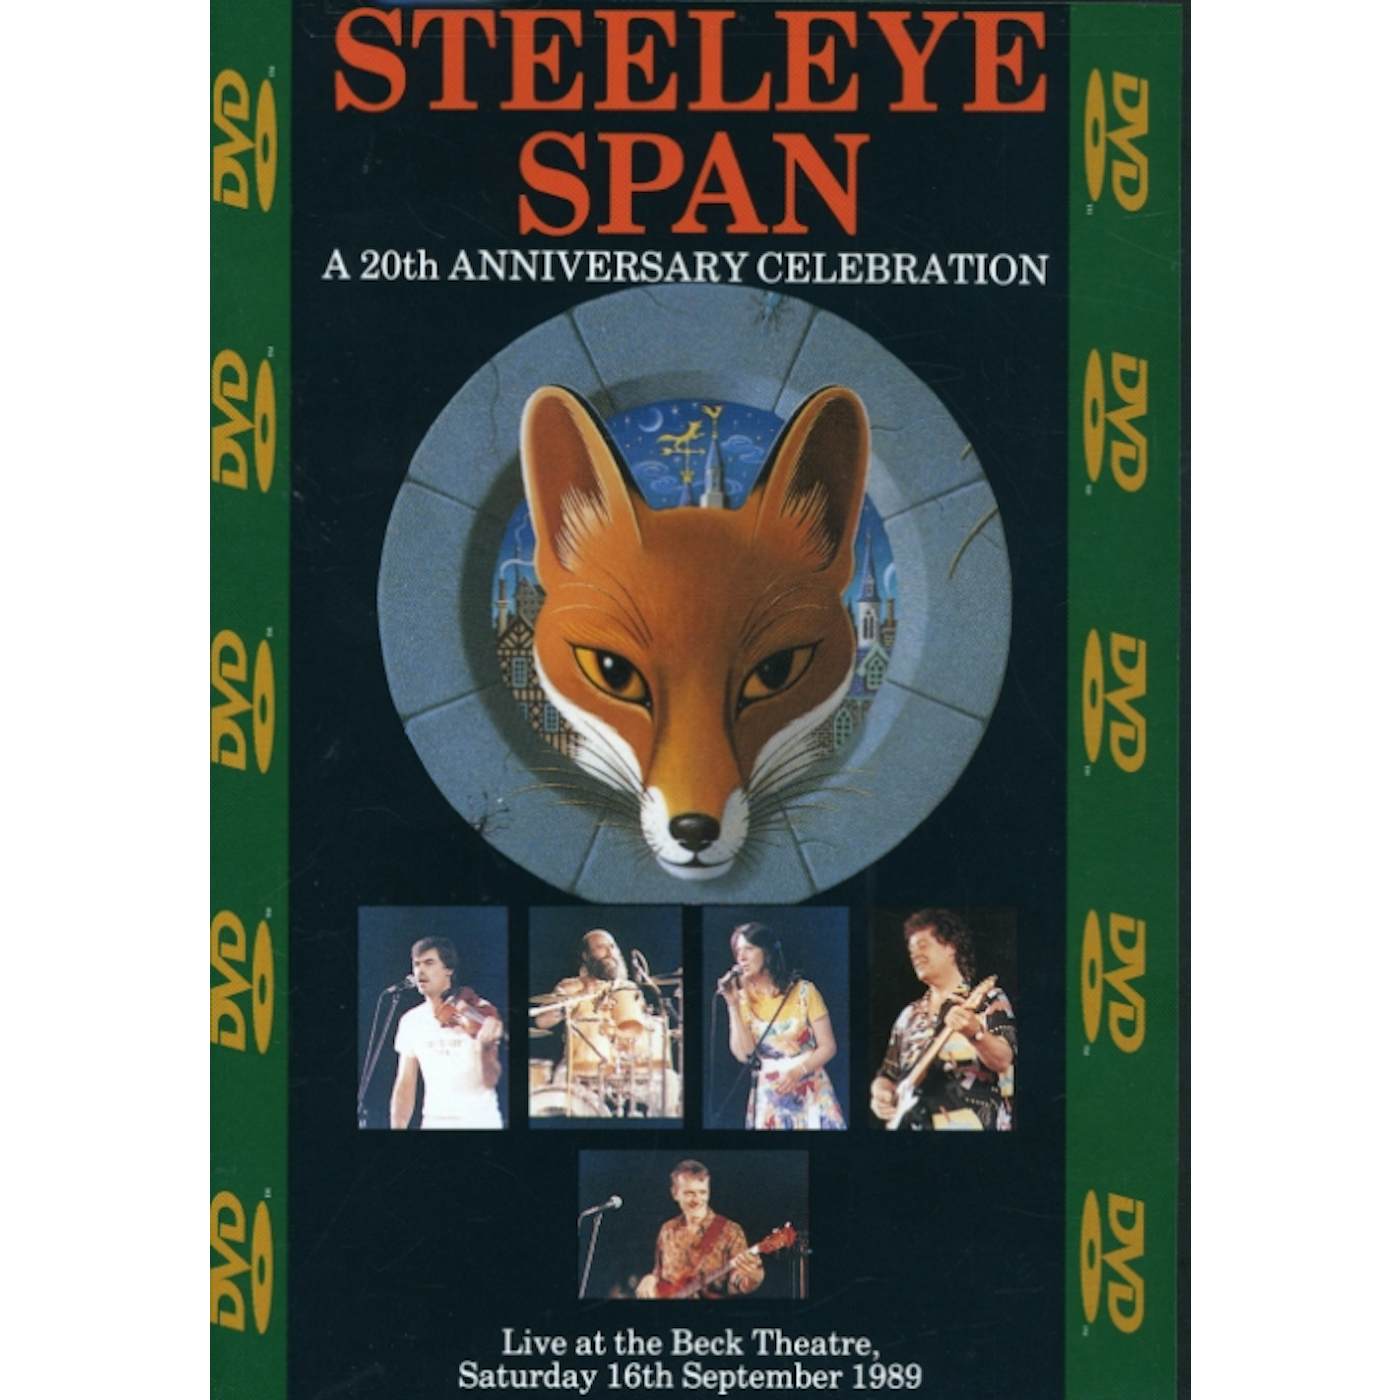 Steeleye Span 20TH ANNIVERSARY CELEBRATION DVD